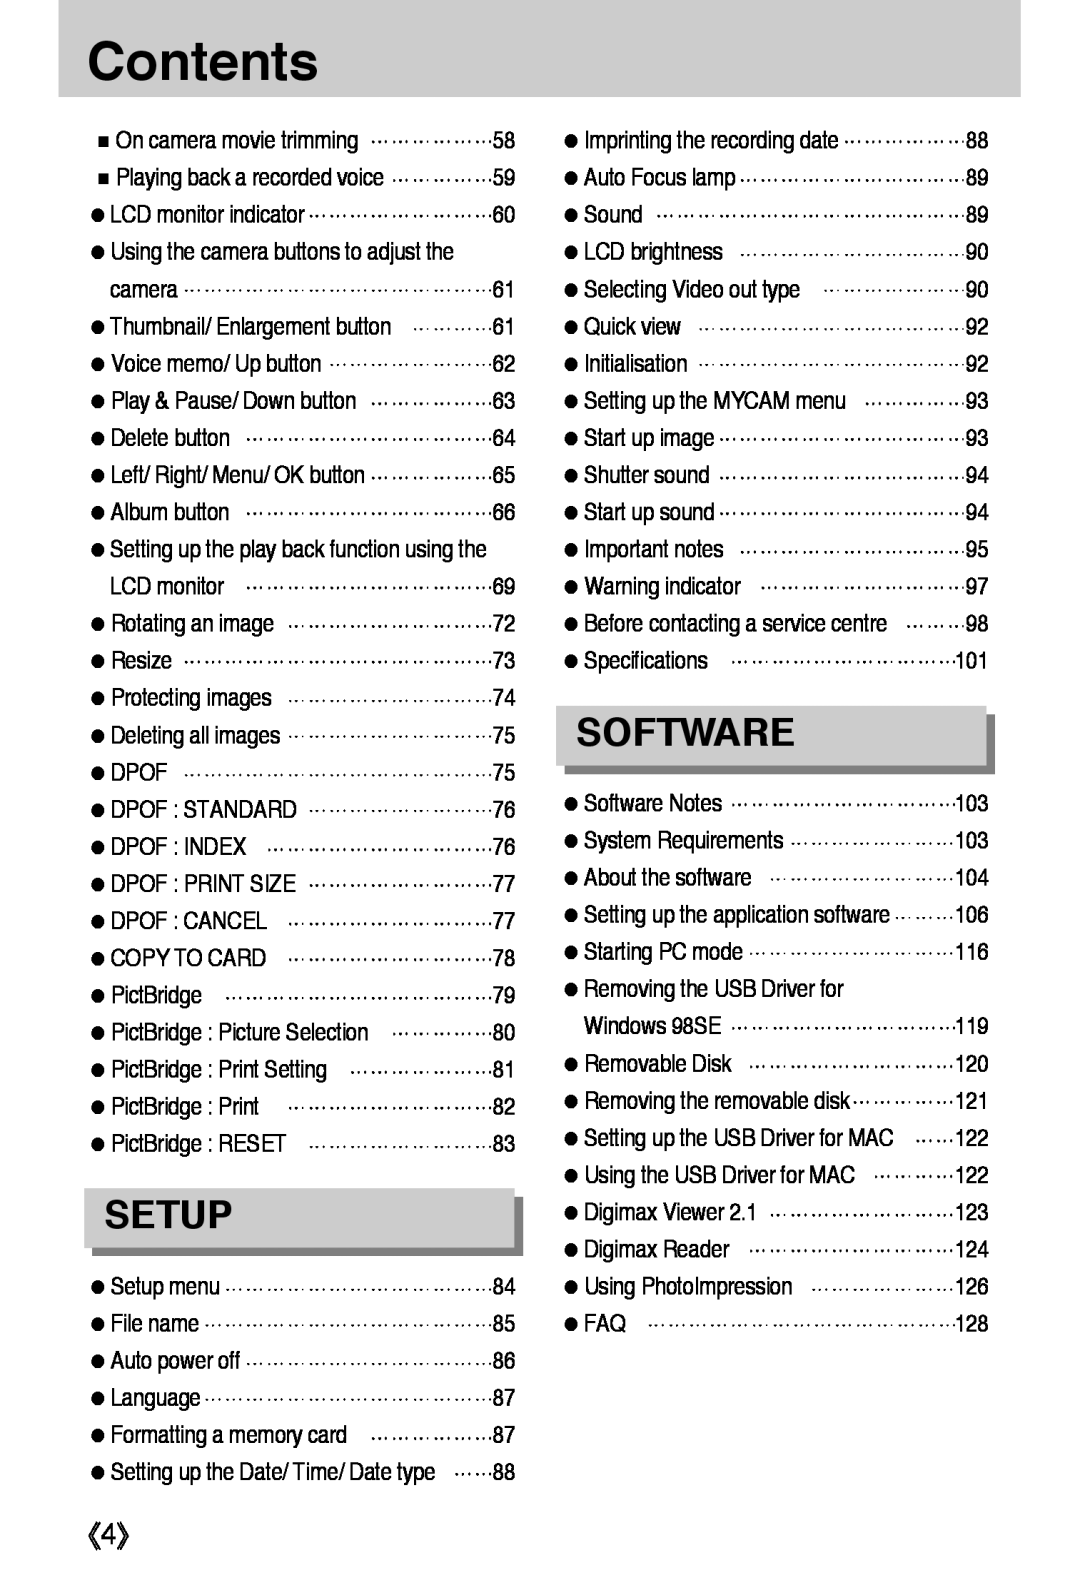 Samsung L50 user manual Software, Setup, Contents 